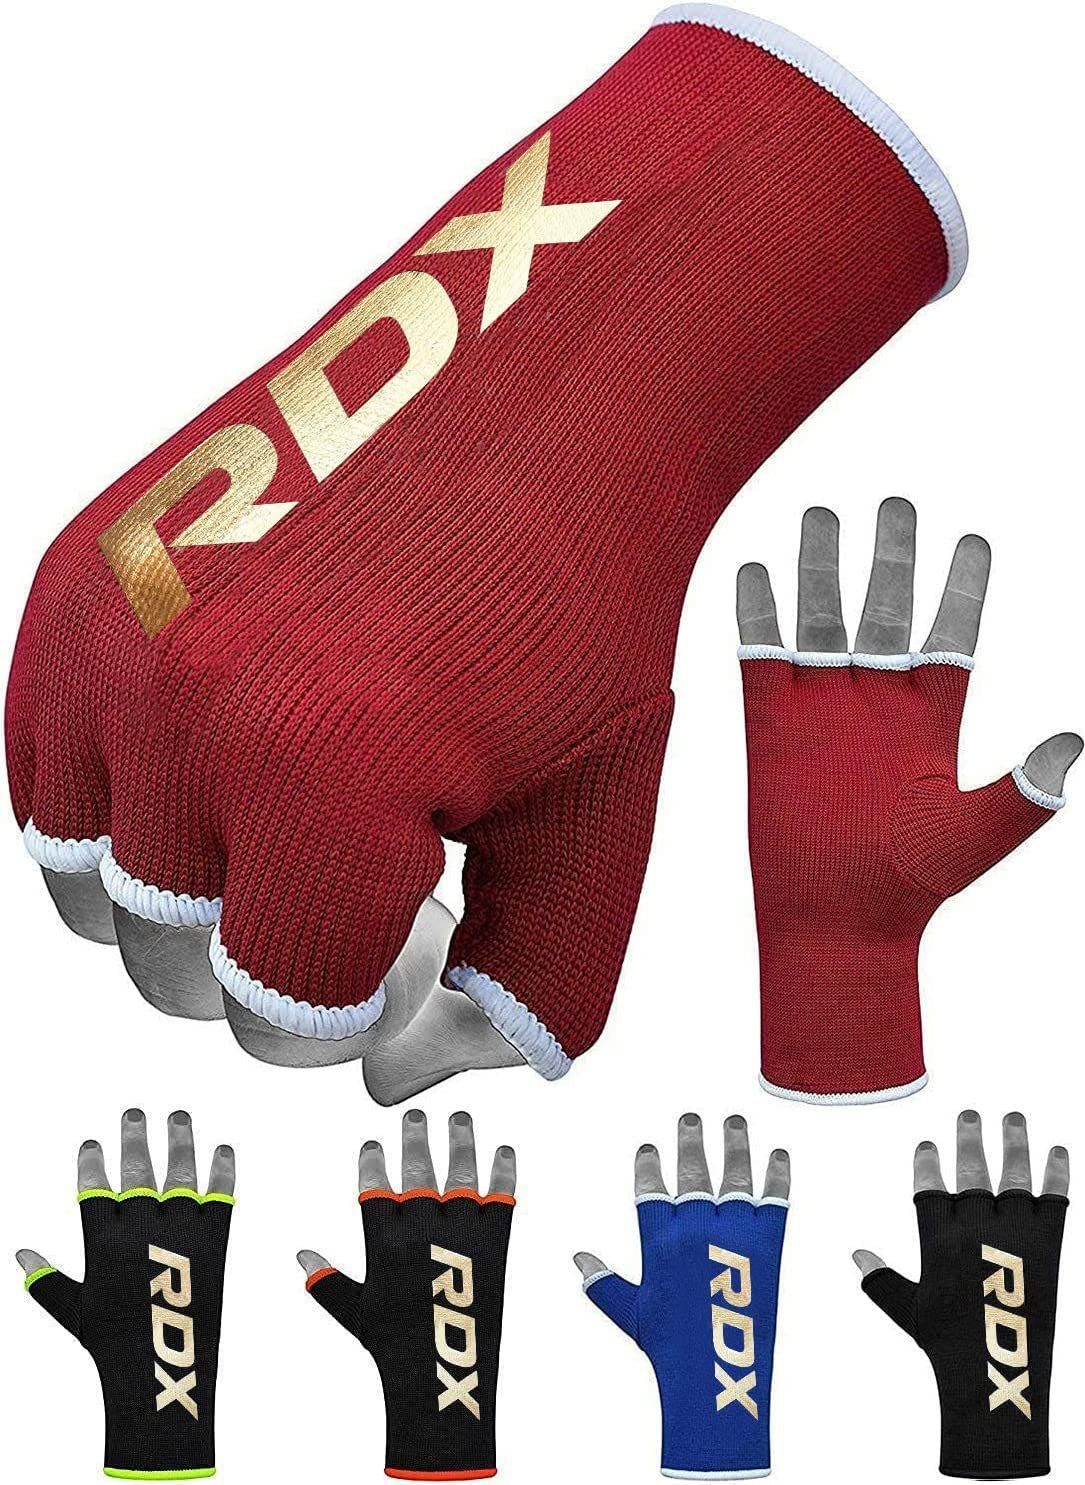 Wraps RED Boxbandagen Boxen Handschuhe Sports RDX Innere Hand Boxbandagen Sparring RDX Training,